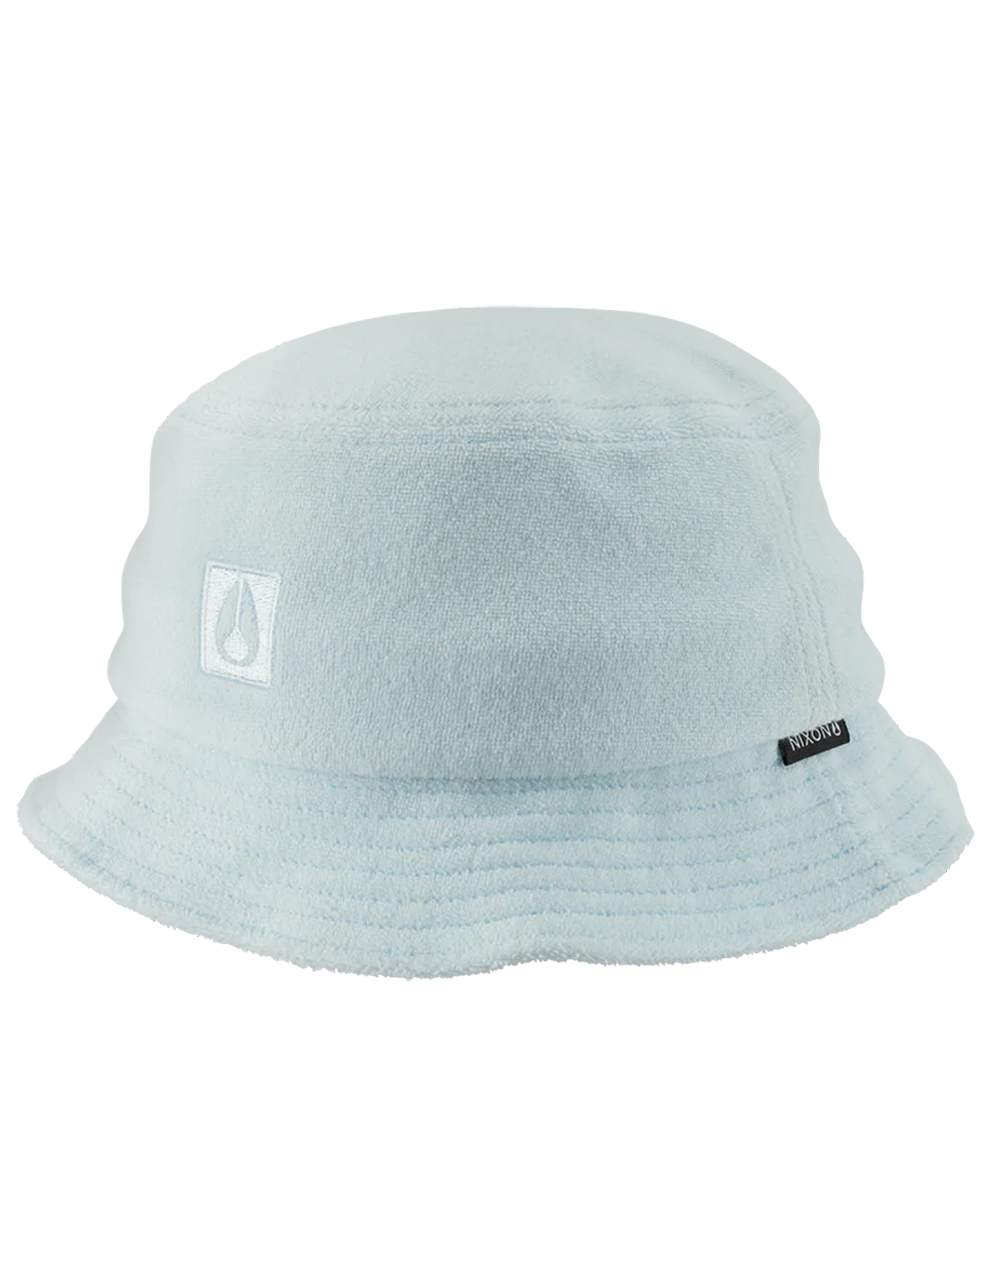 NIXON Portofino Terry Bucket Hat